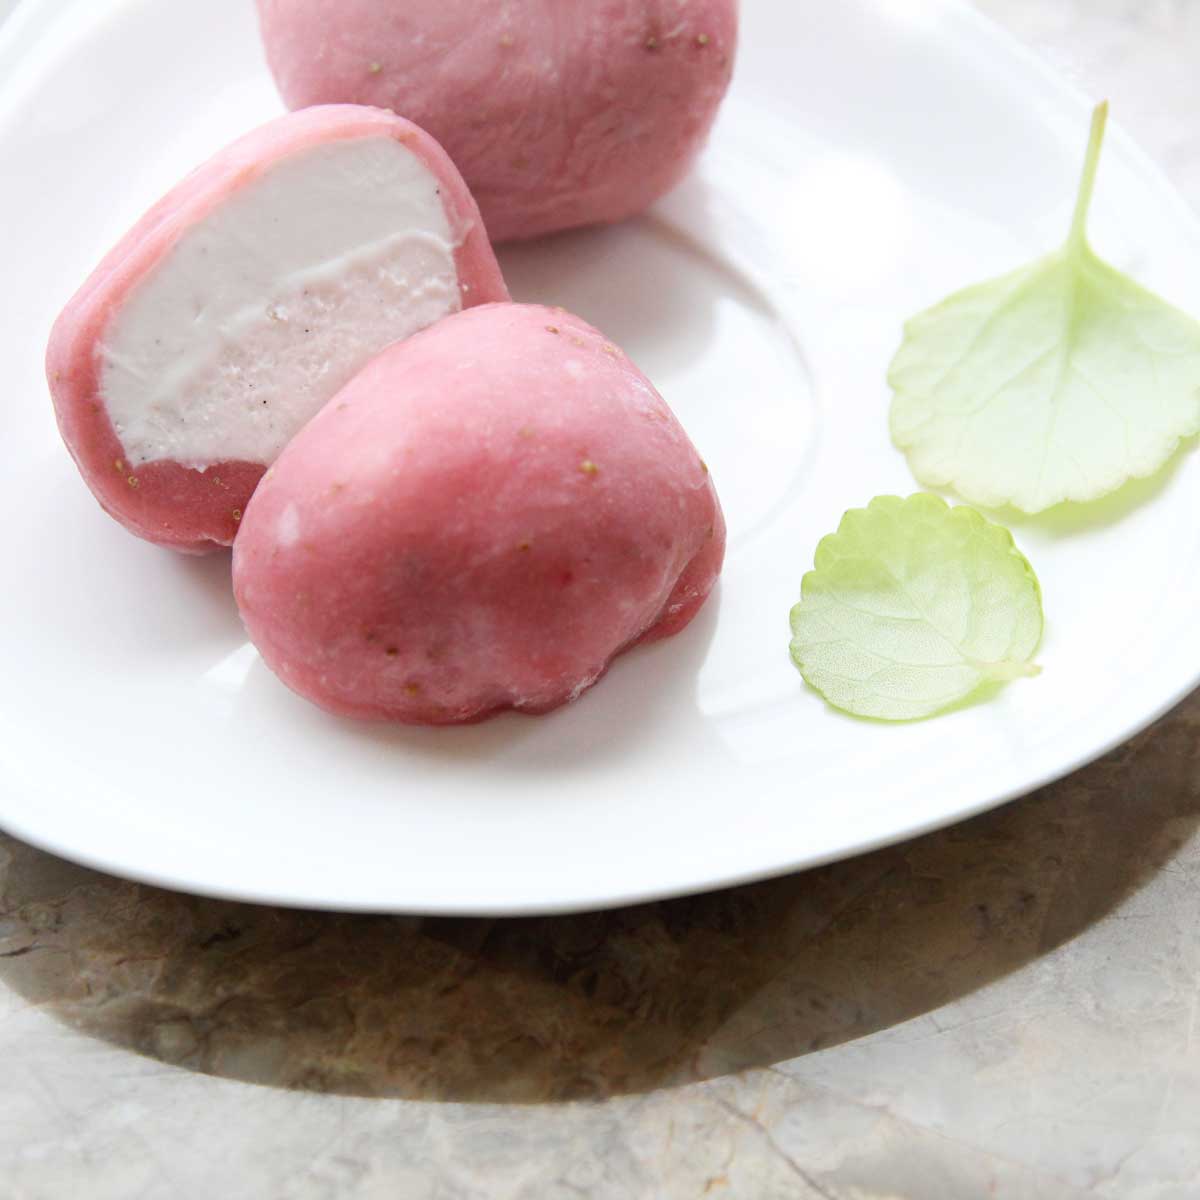 Homemade Japanese Strawberry Mochi Ice Cream Recipe - Banana Chocolate Mochi